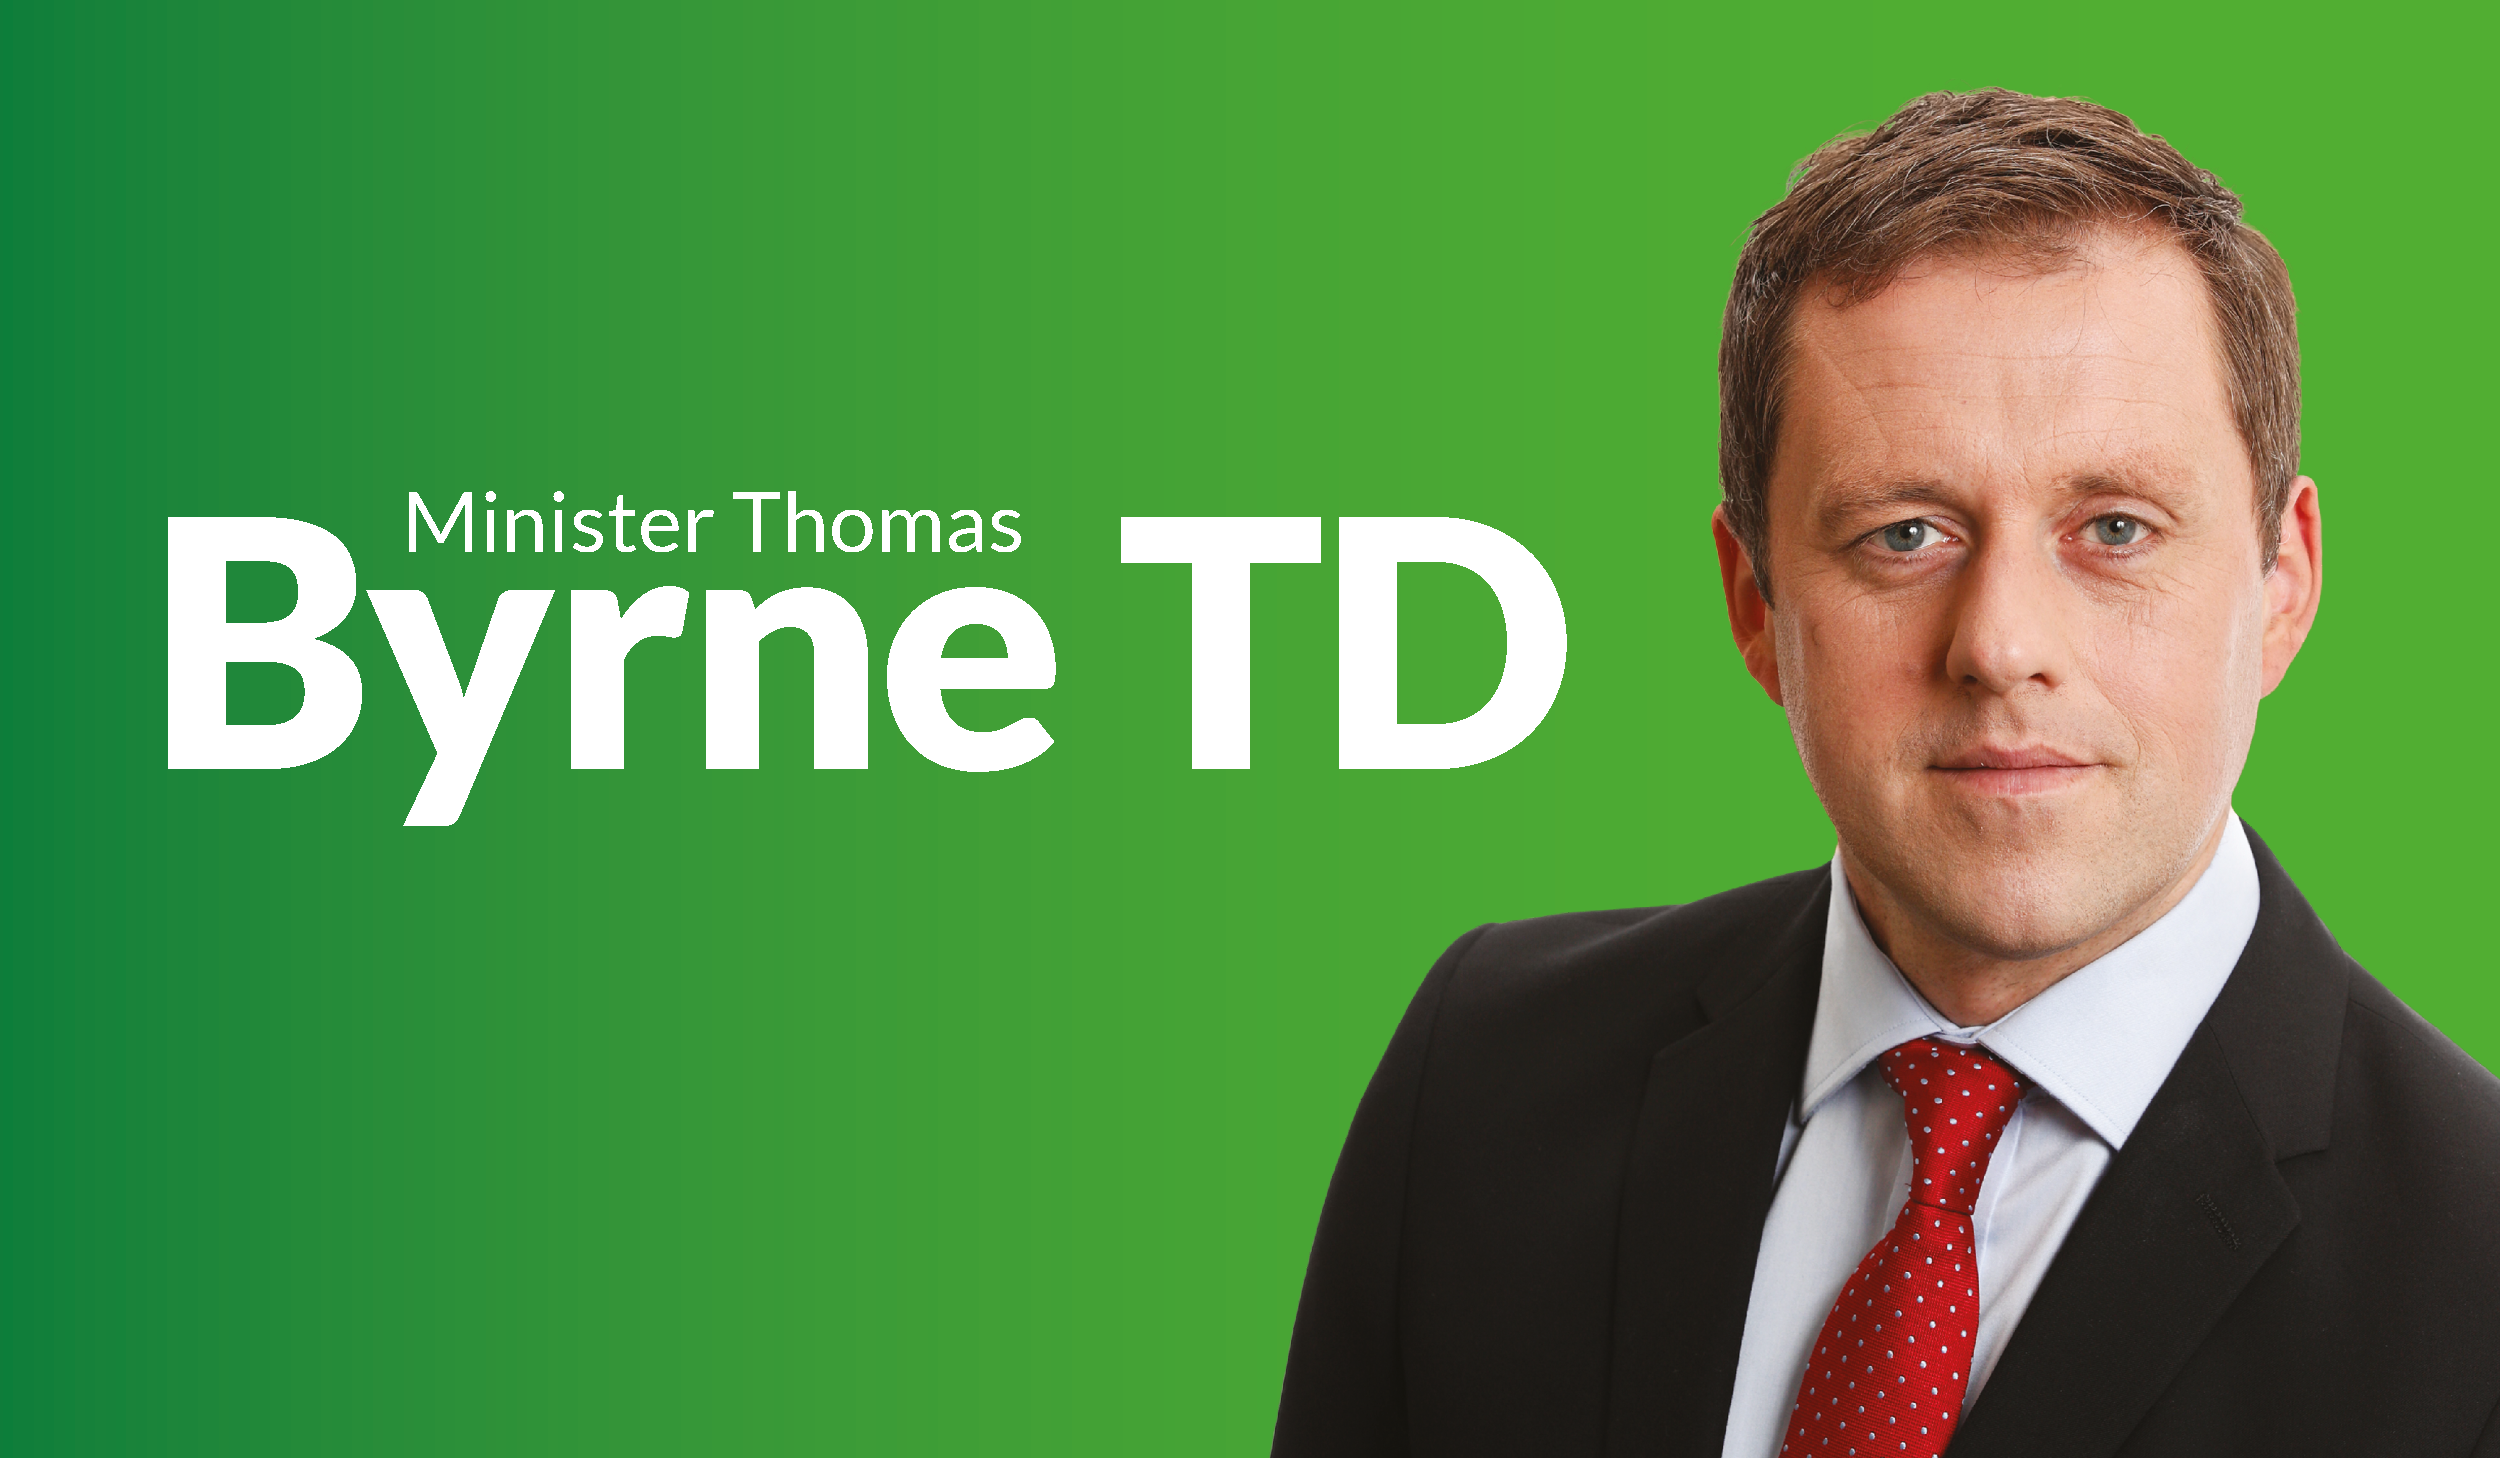 Speech by the Minister for Sport, Physical Education and the Gaeltacht, Thomas Byrne TD at the 82ú Ard Fheis